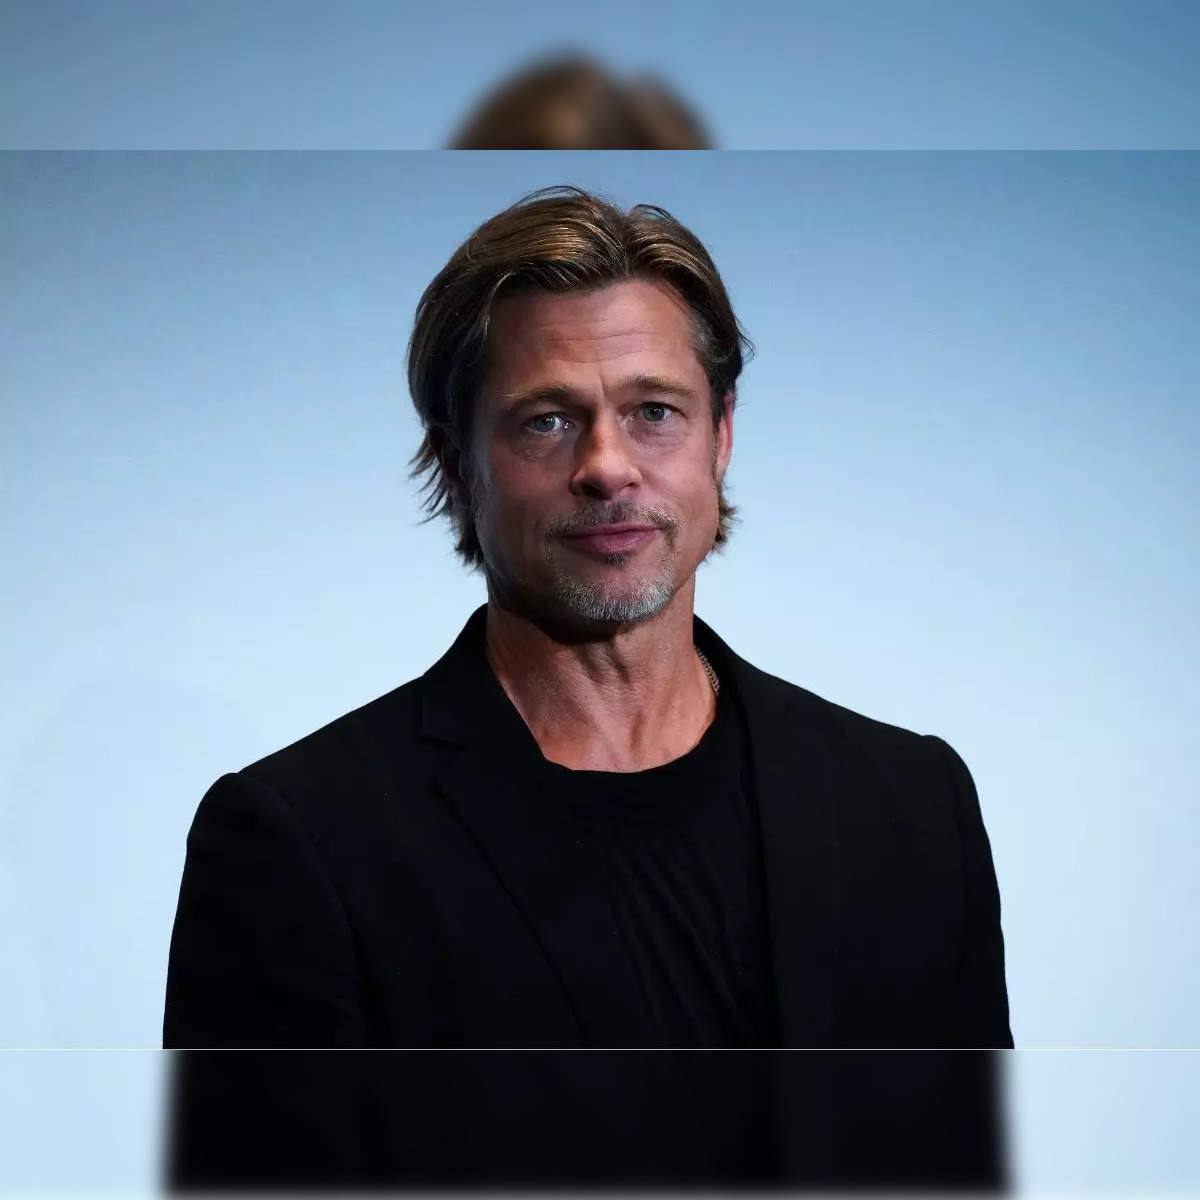 Brad Pitt Says He's on the 'Last Leg' of His Career